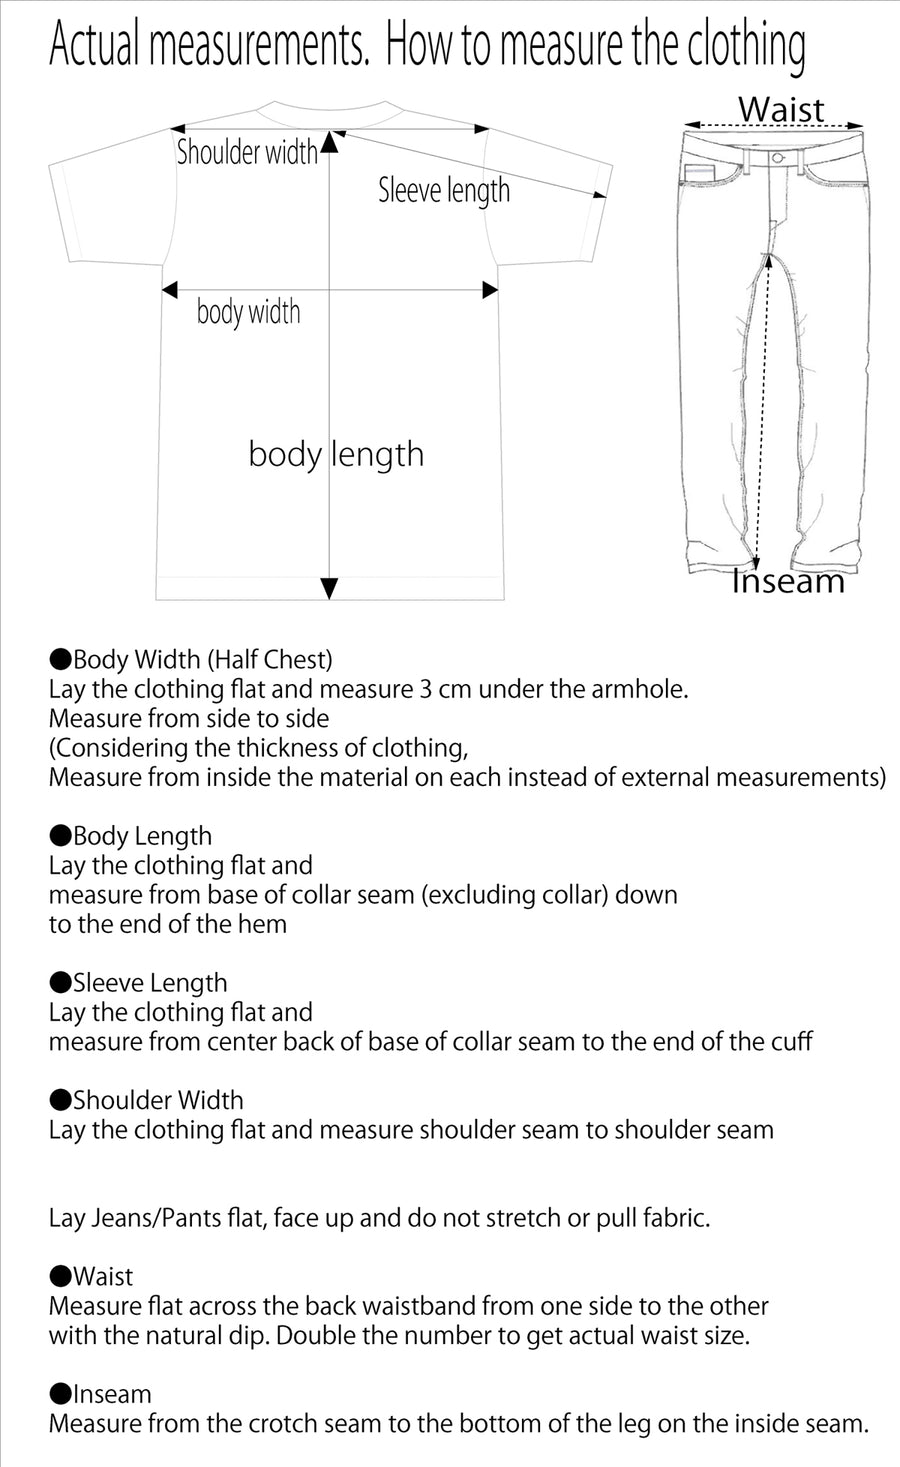 Kojima Genes Two Tone Panel Pants Men's Duck Carpenter Pants with Contrast Inside Leg Panel rnb1081f RNB-1081F Brown/Beige